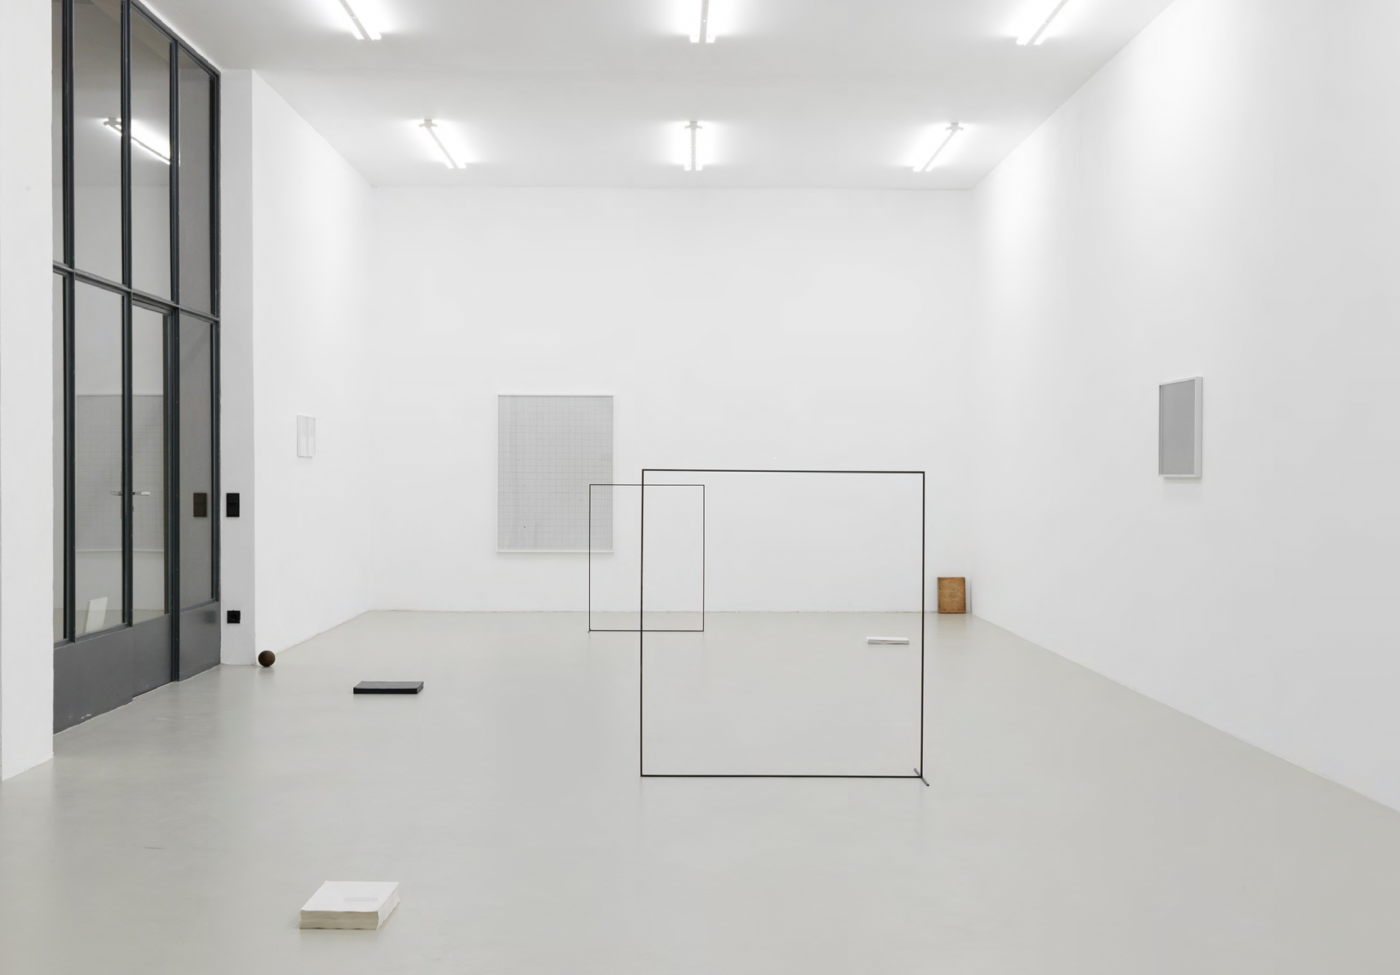 Daniel Gustav Cramer, Seventeen, 2015. Installation view Kunstverein Nürnberg, Germany
